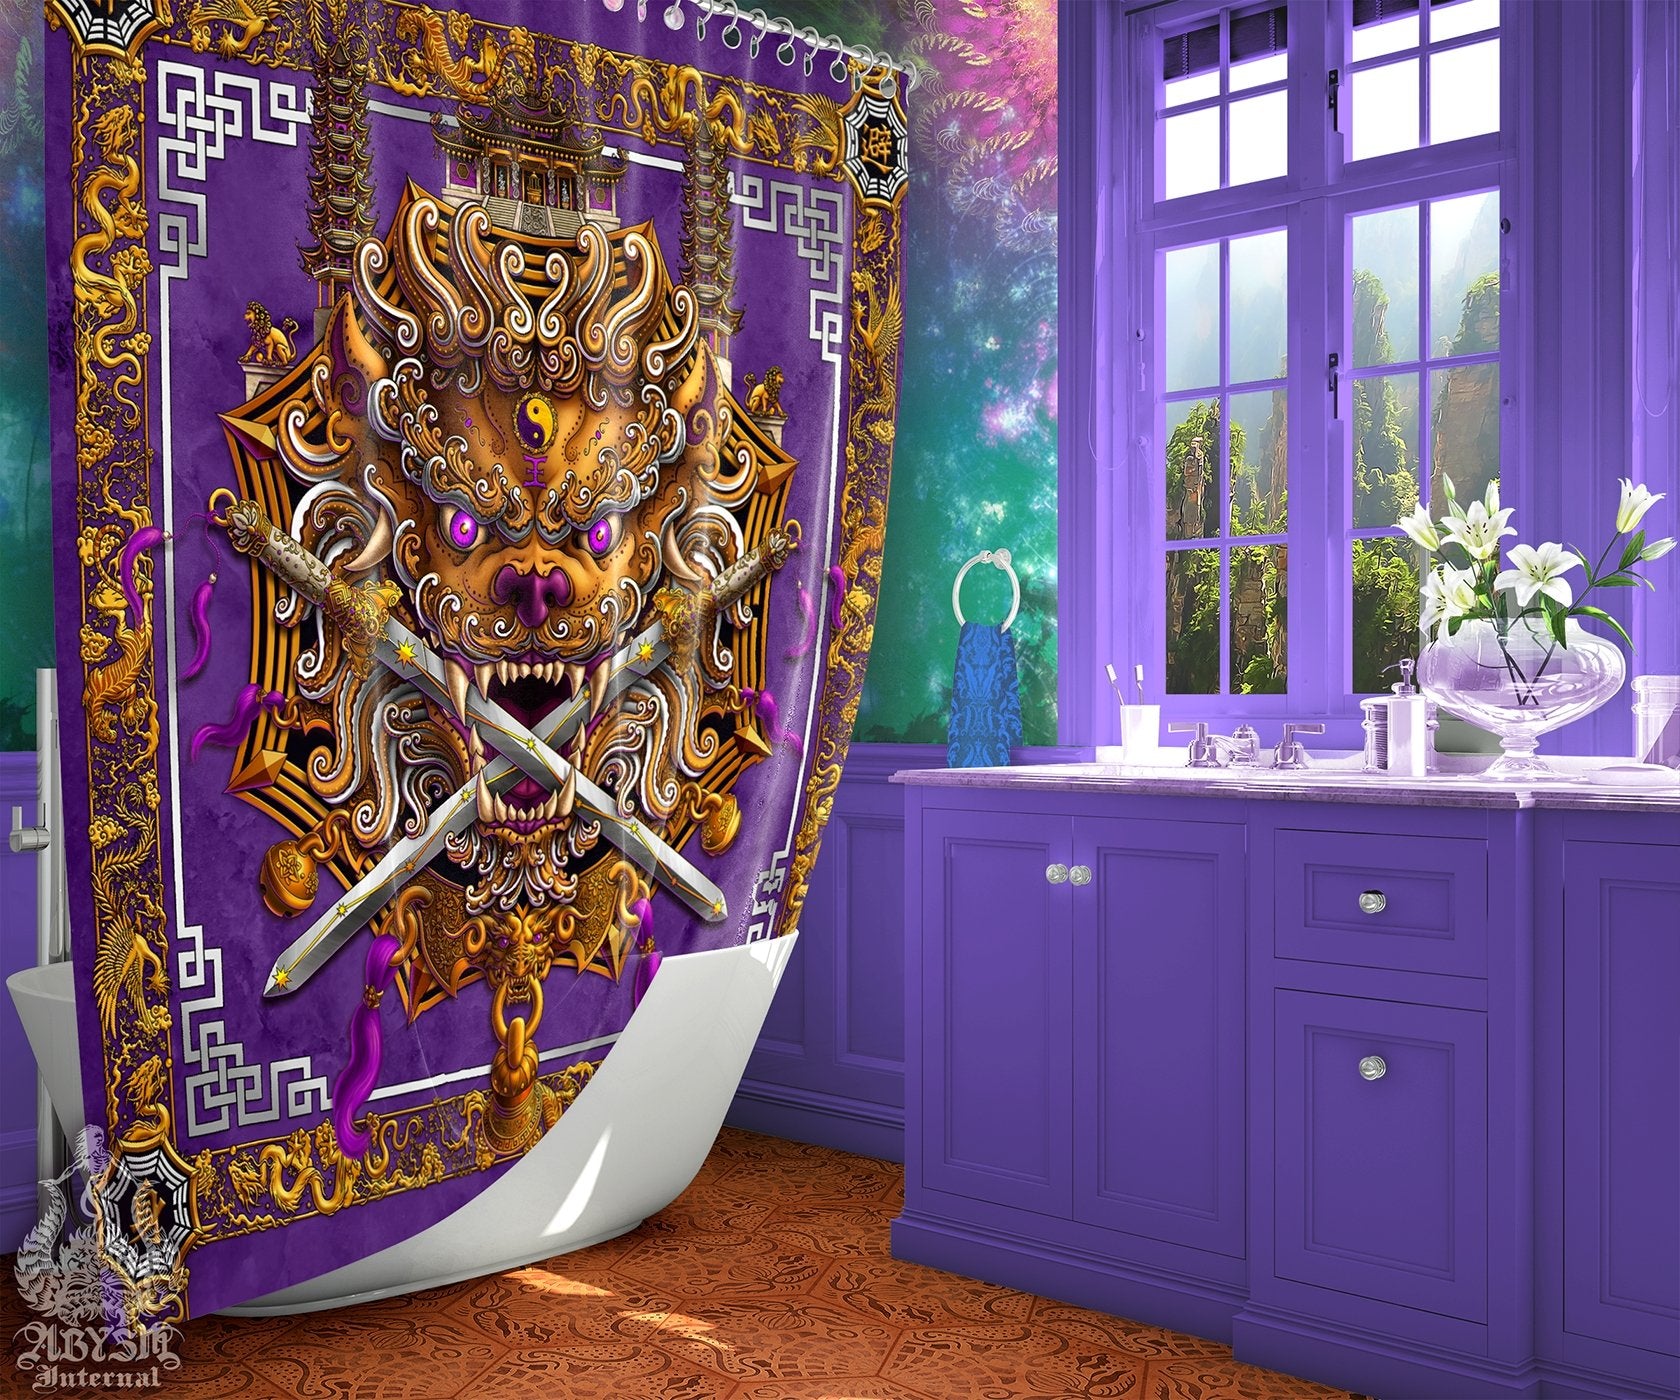 Lion Shower Curtain, Taiwan Sword Lion, Chinese Bathroom, Alternative Fantasy Decor, Asian Mythology - Purple and White - Abysm Internal